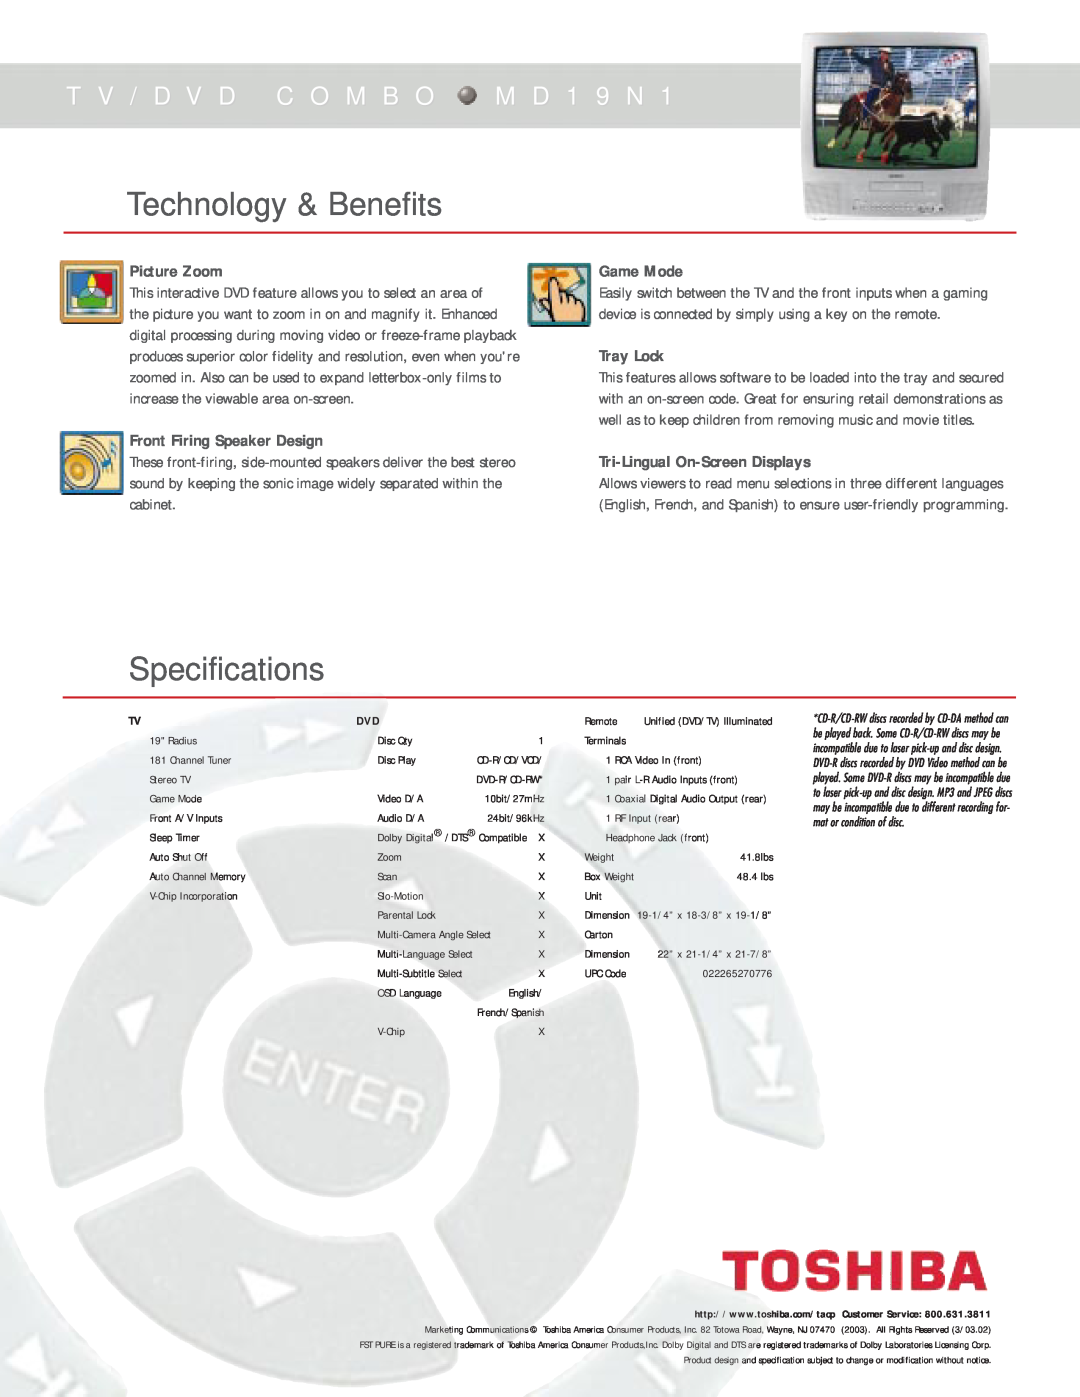 Toshiba MD19N1 Technology & Benefits, Specifications, T V / D V D C O M B O M D 1 9 N, Picture Zoom, Game Mode, Tray Lock 